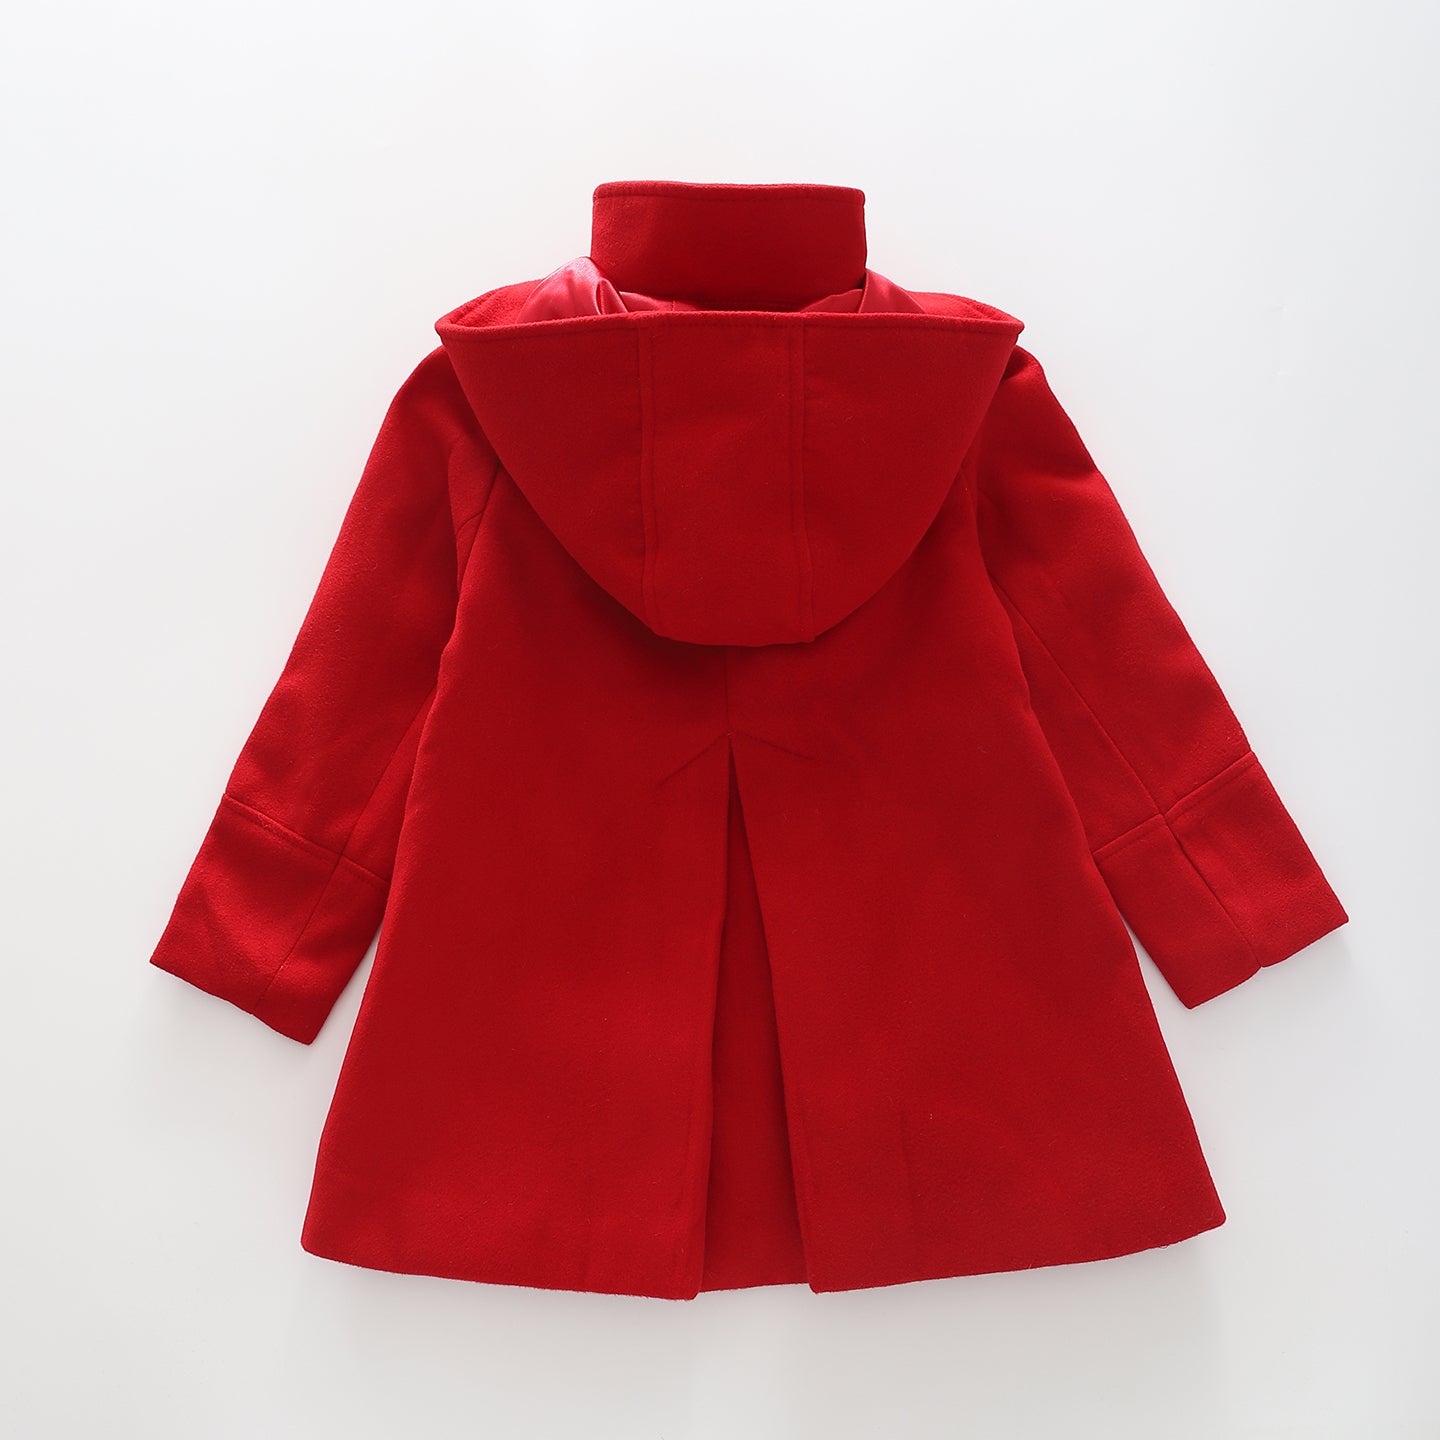 Girls' Red Winter Coat